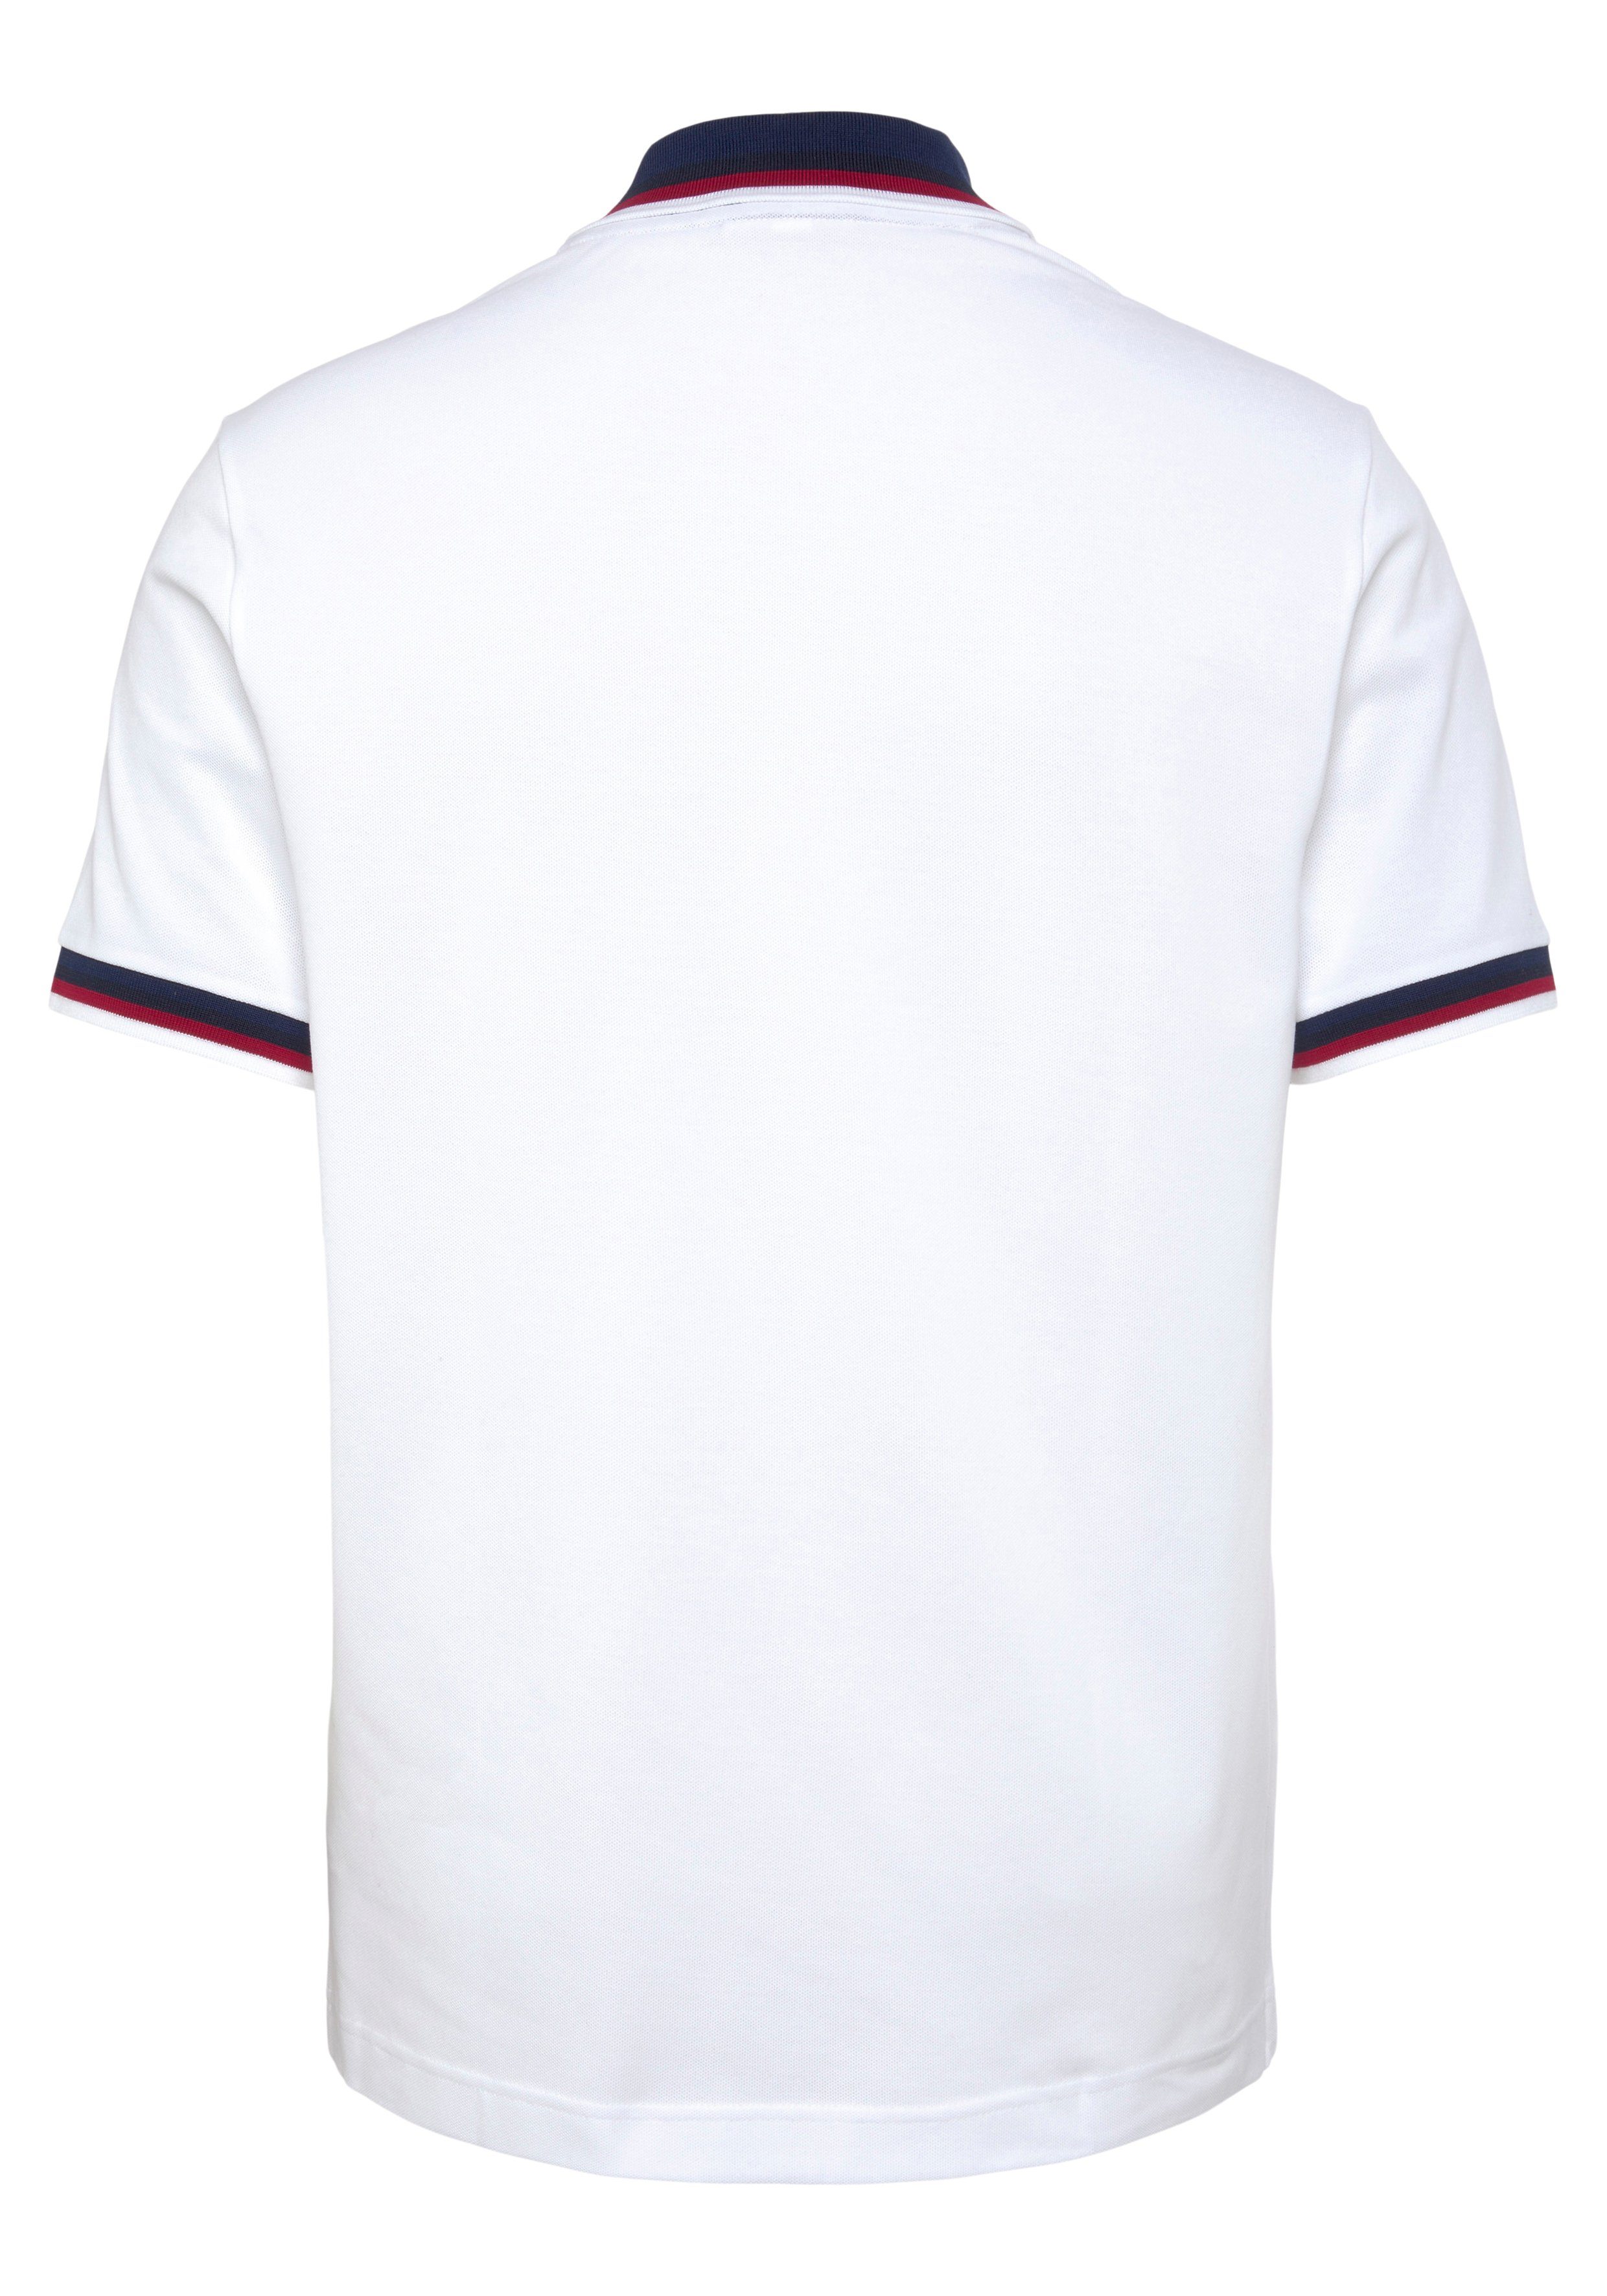 auf Lacoste mit der Brust WHITE Poloshirt Logo POLO Lacoste